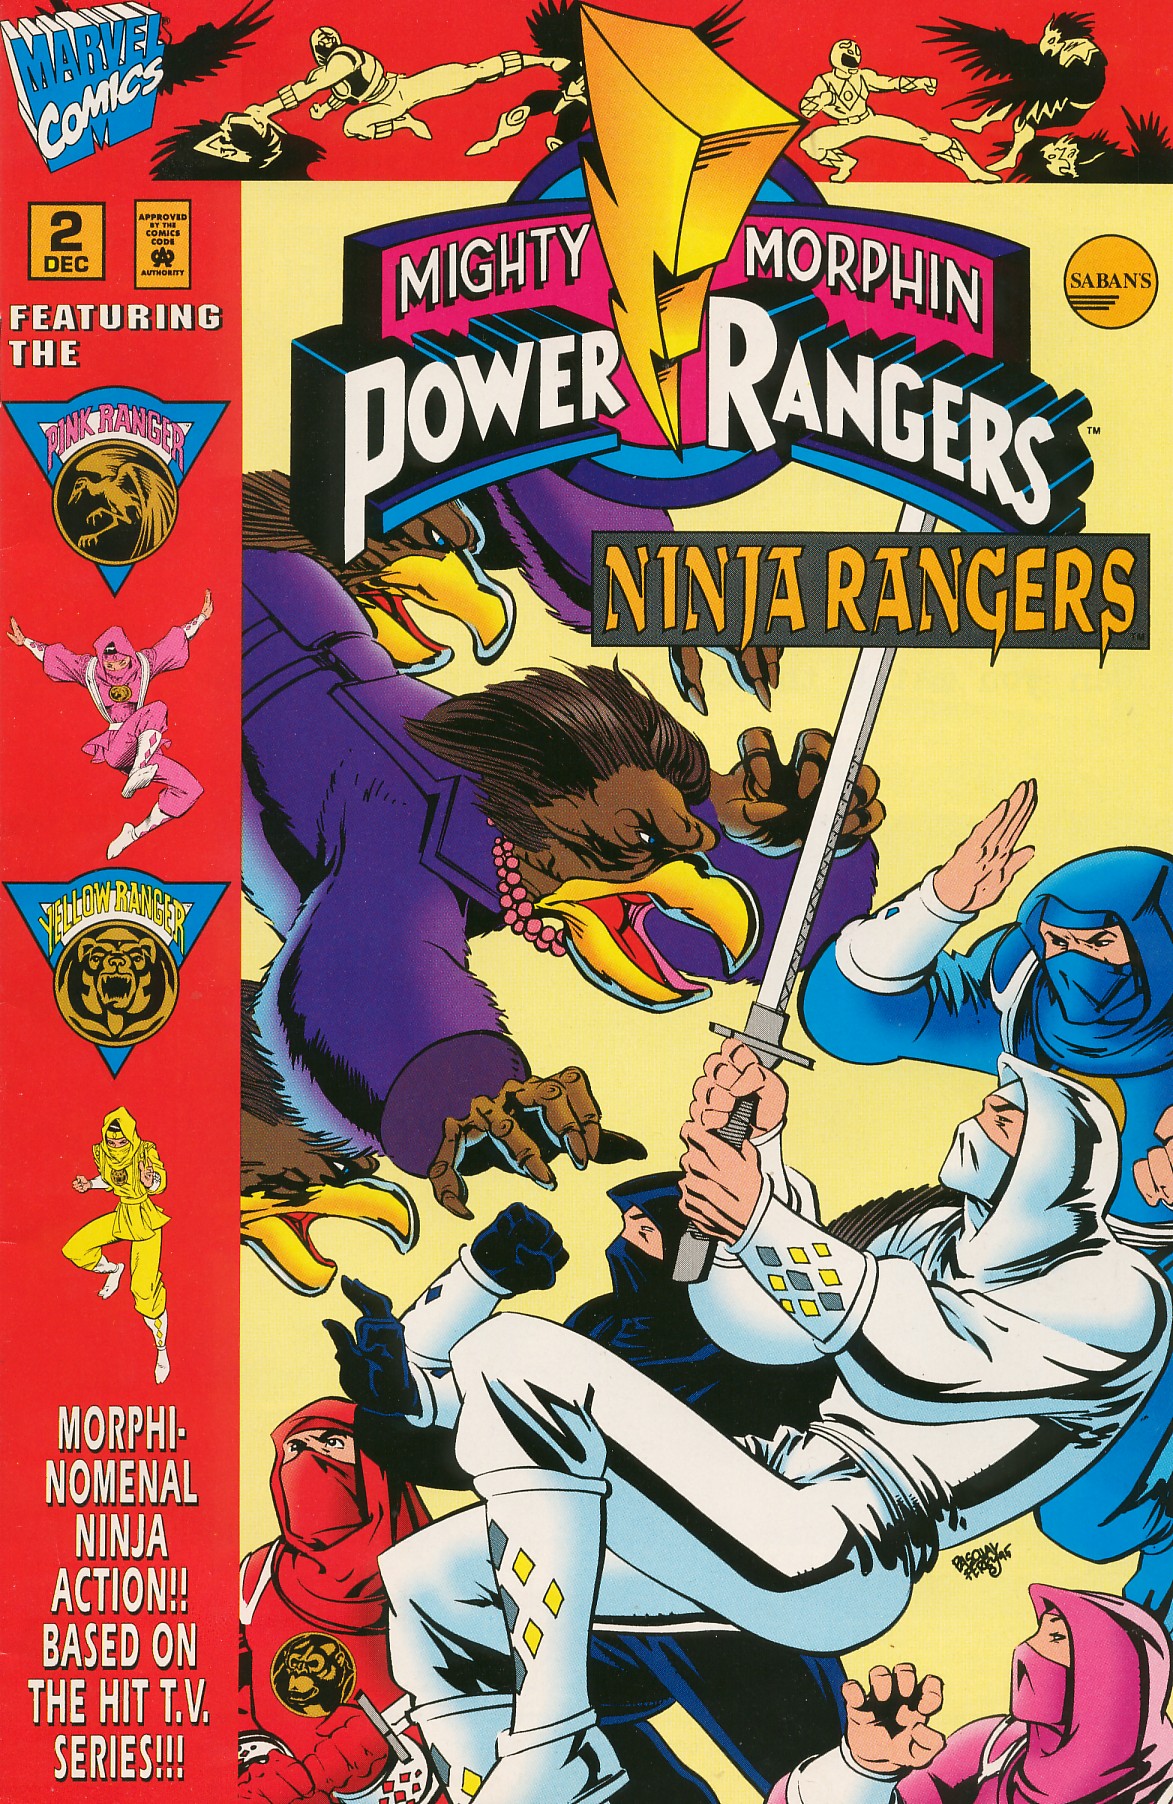 Mighty Morphin Power Rangers Ninja Rangers Issue 2